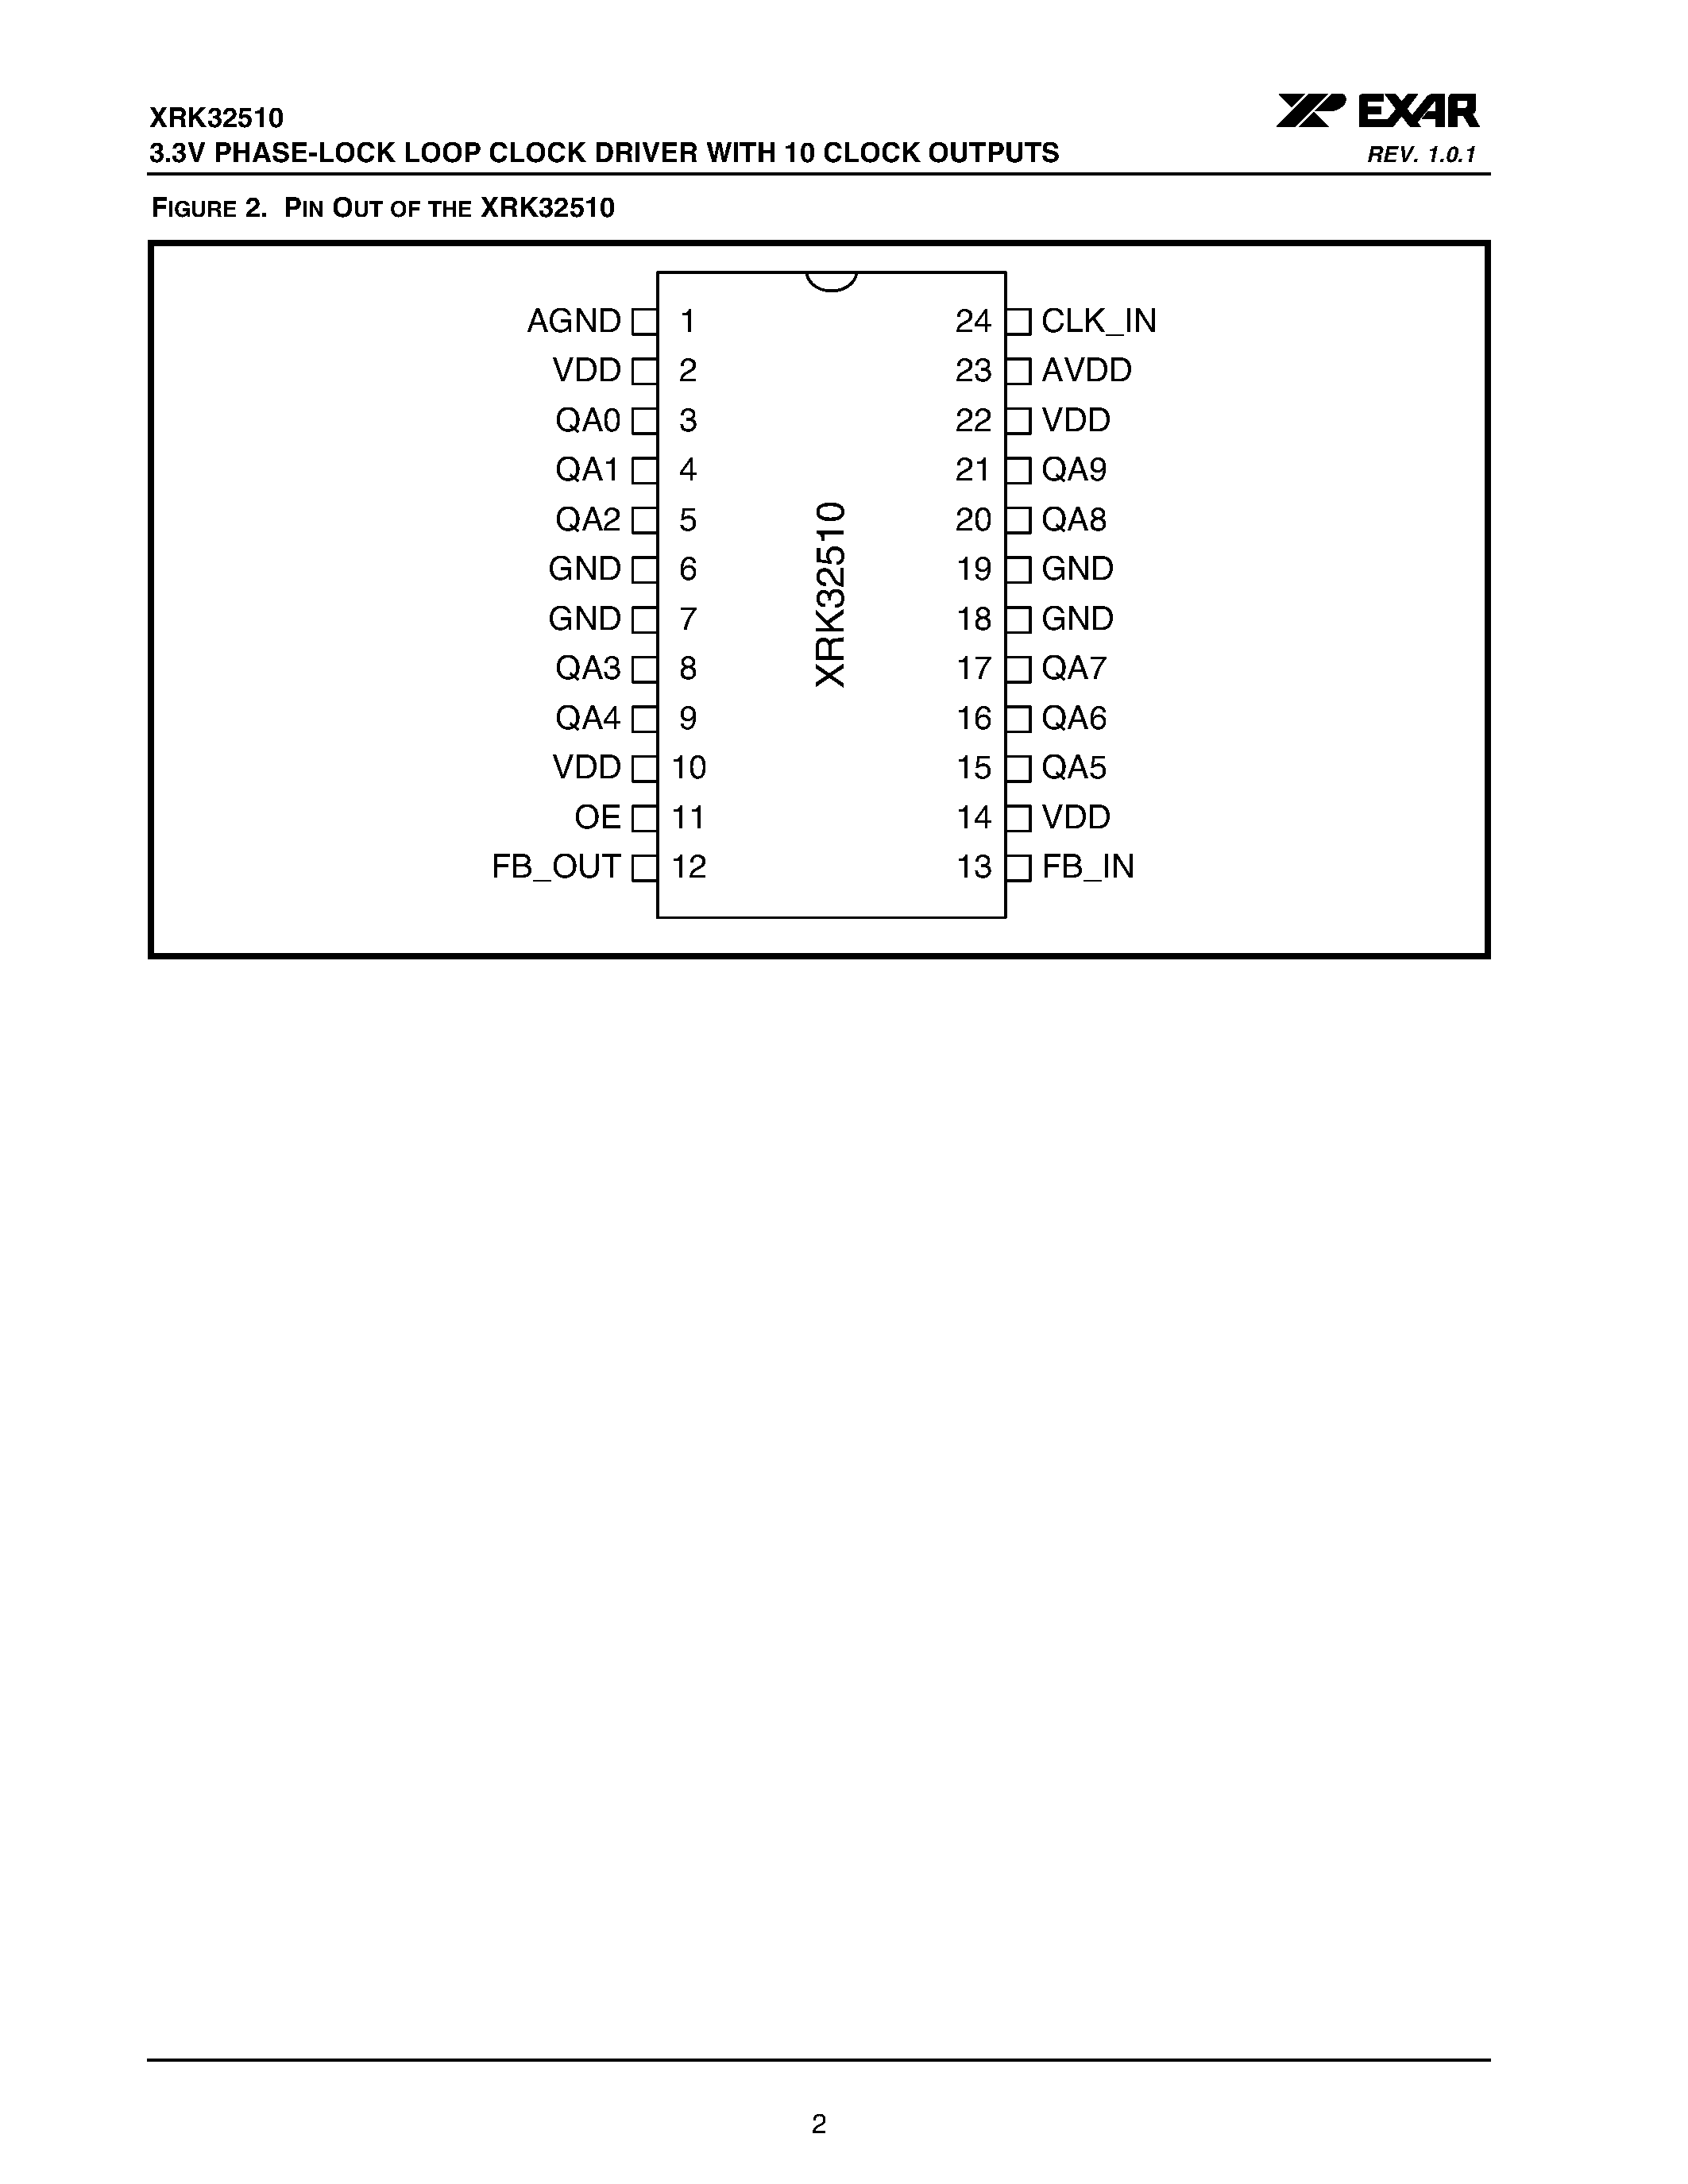 Datasheet XRK32510 - 3.3V PHASE-LOCK LOOP CLOCK DRIVER page 2